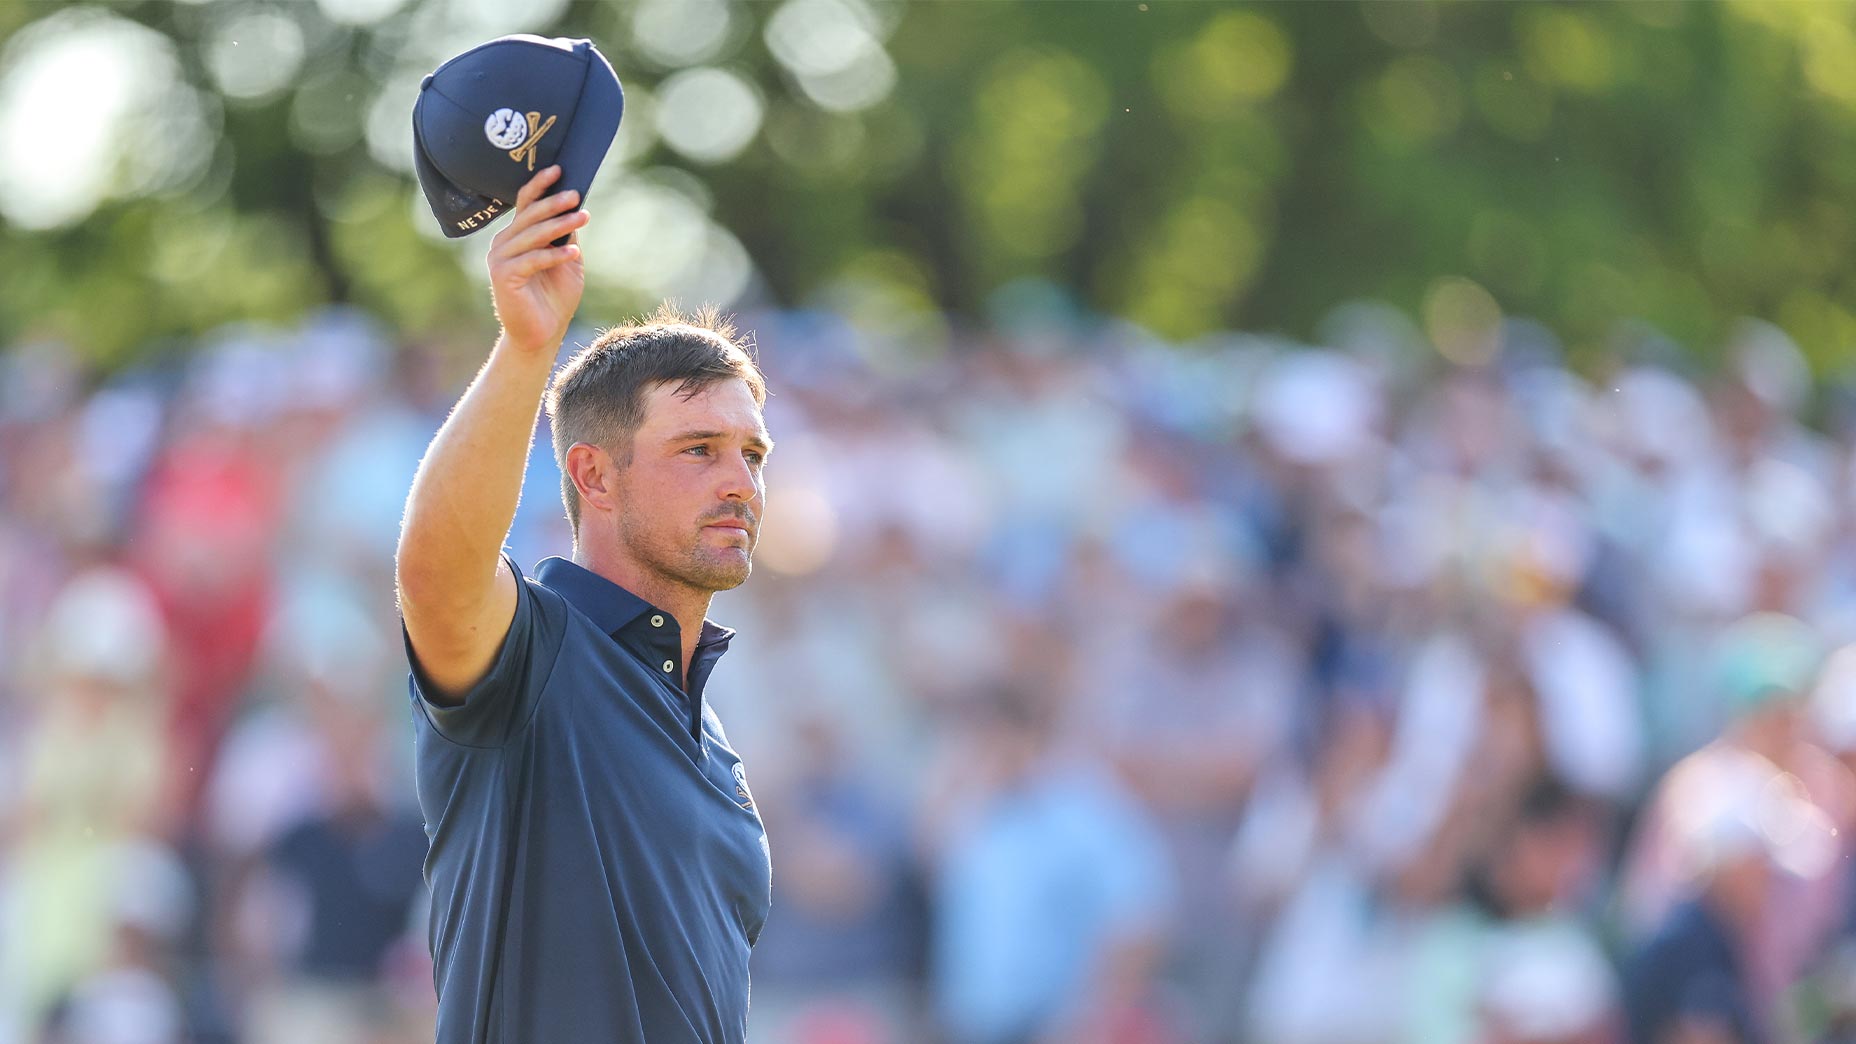 bryson dechambeau tips cap in navy hat at the PGA Championship.